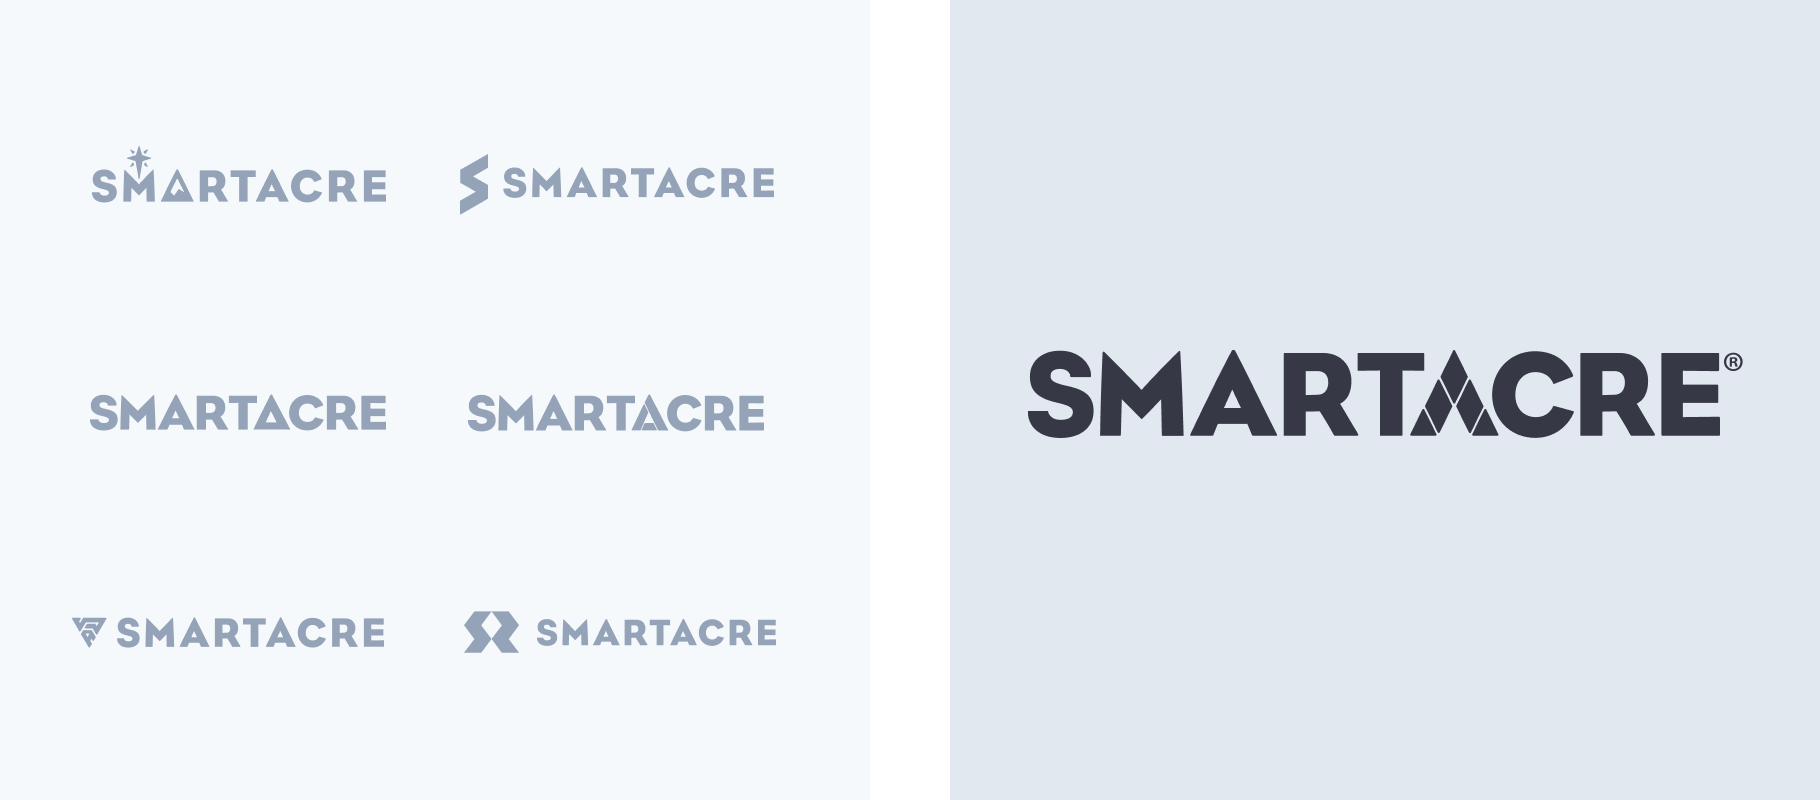 SmartAcre logo Exploration and ideas